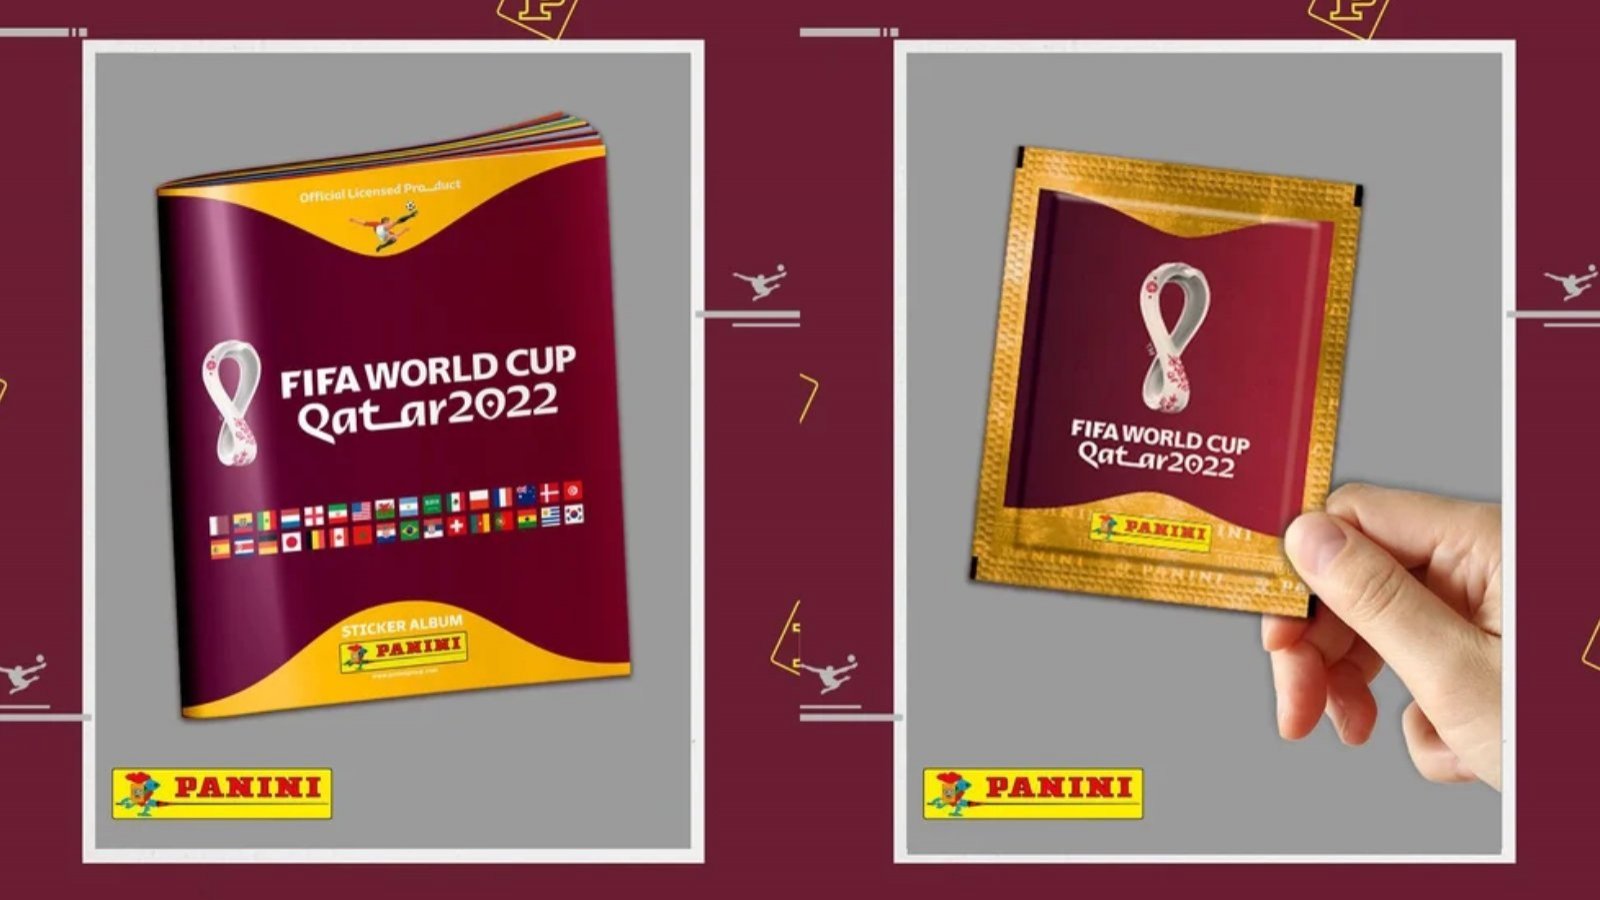 Advierten estafas por álbum del Mundial de Qatar 2022